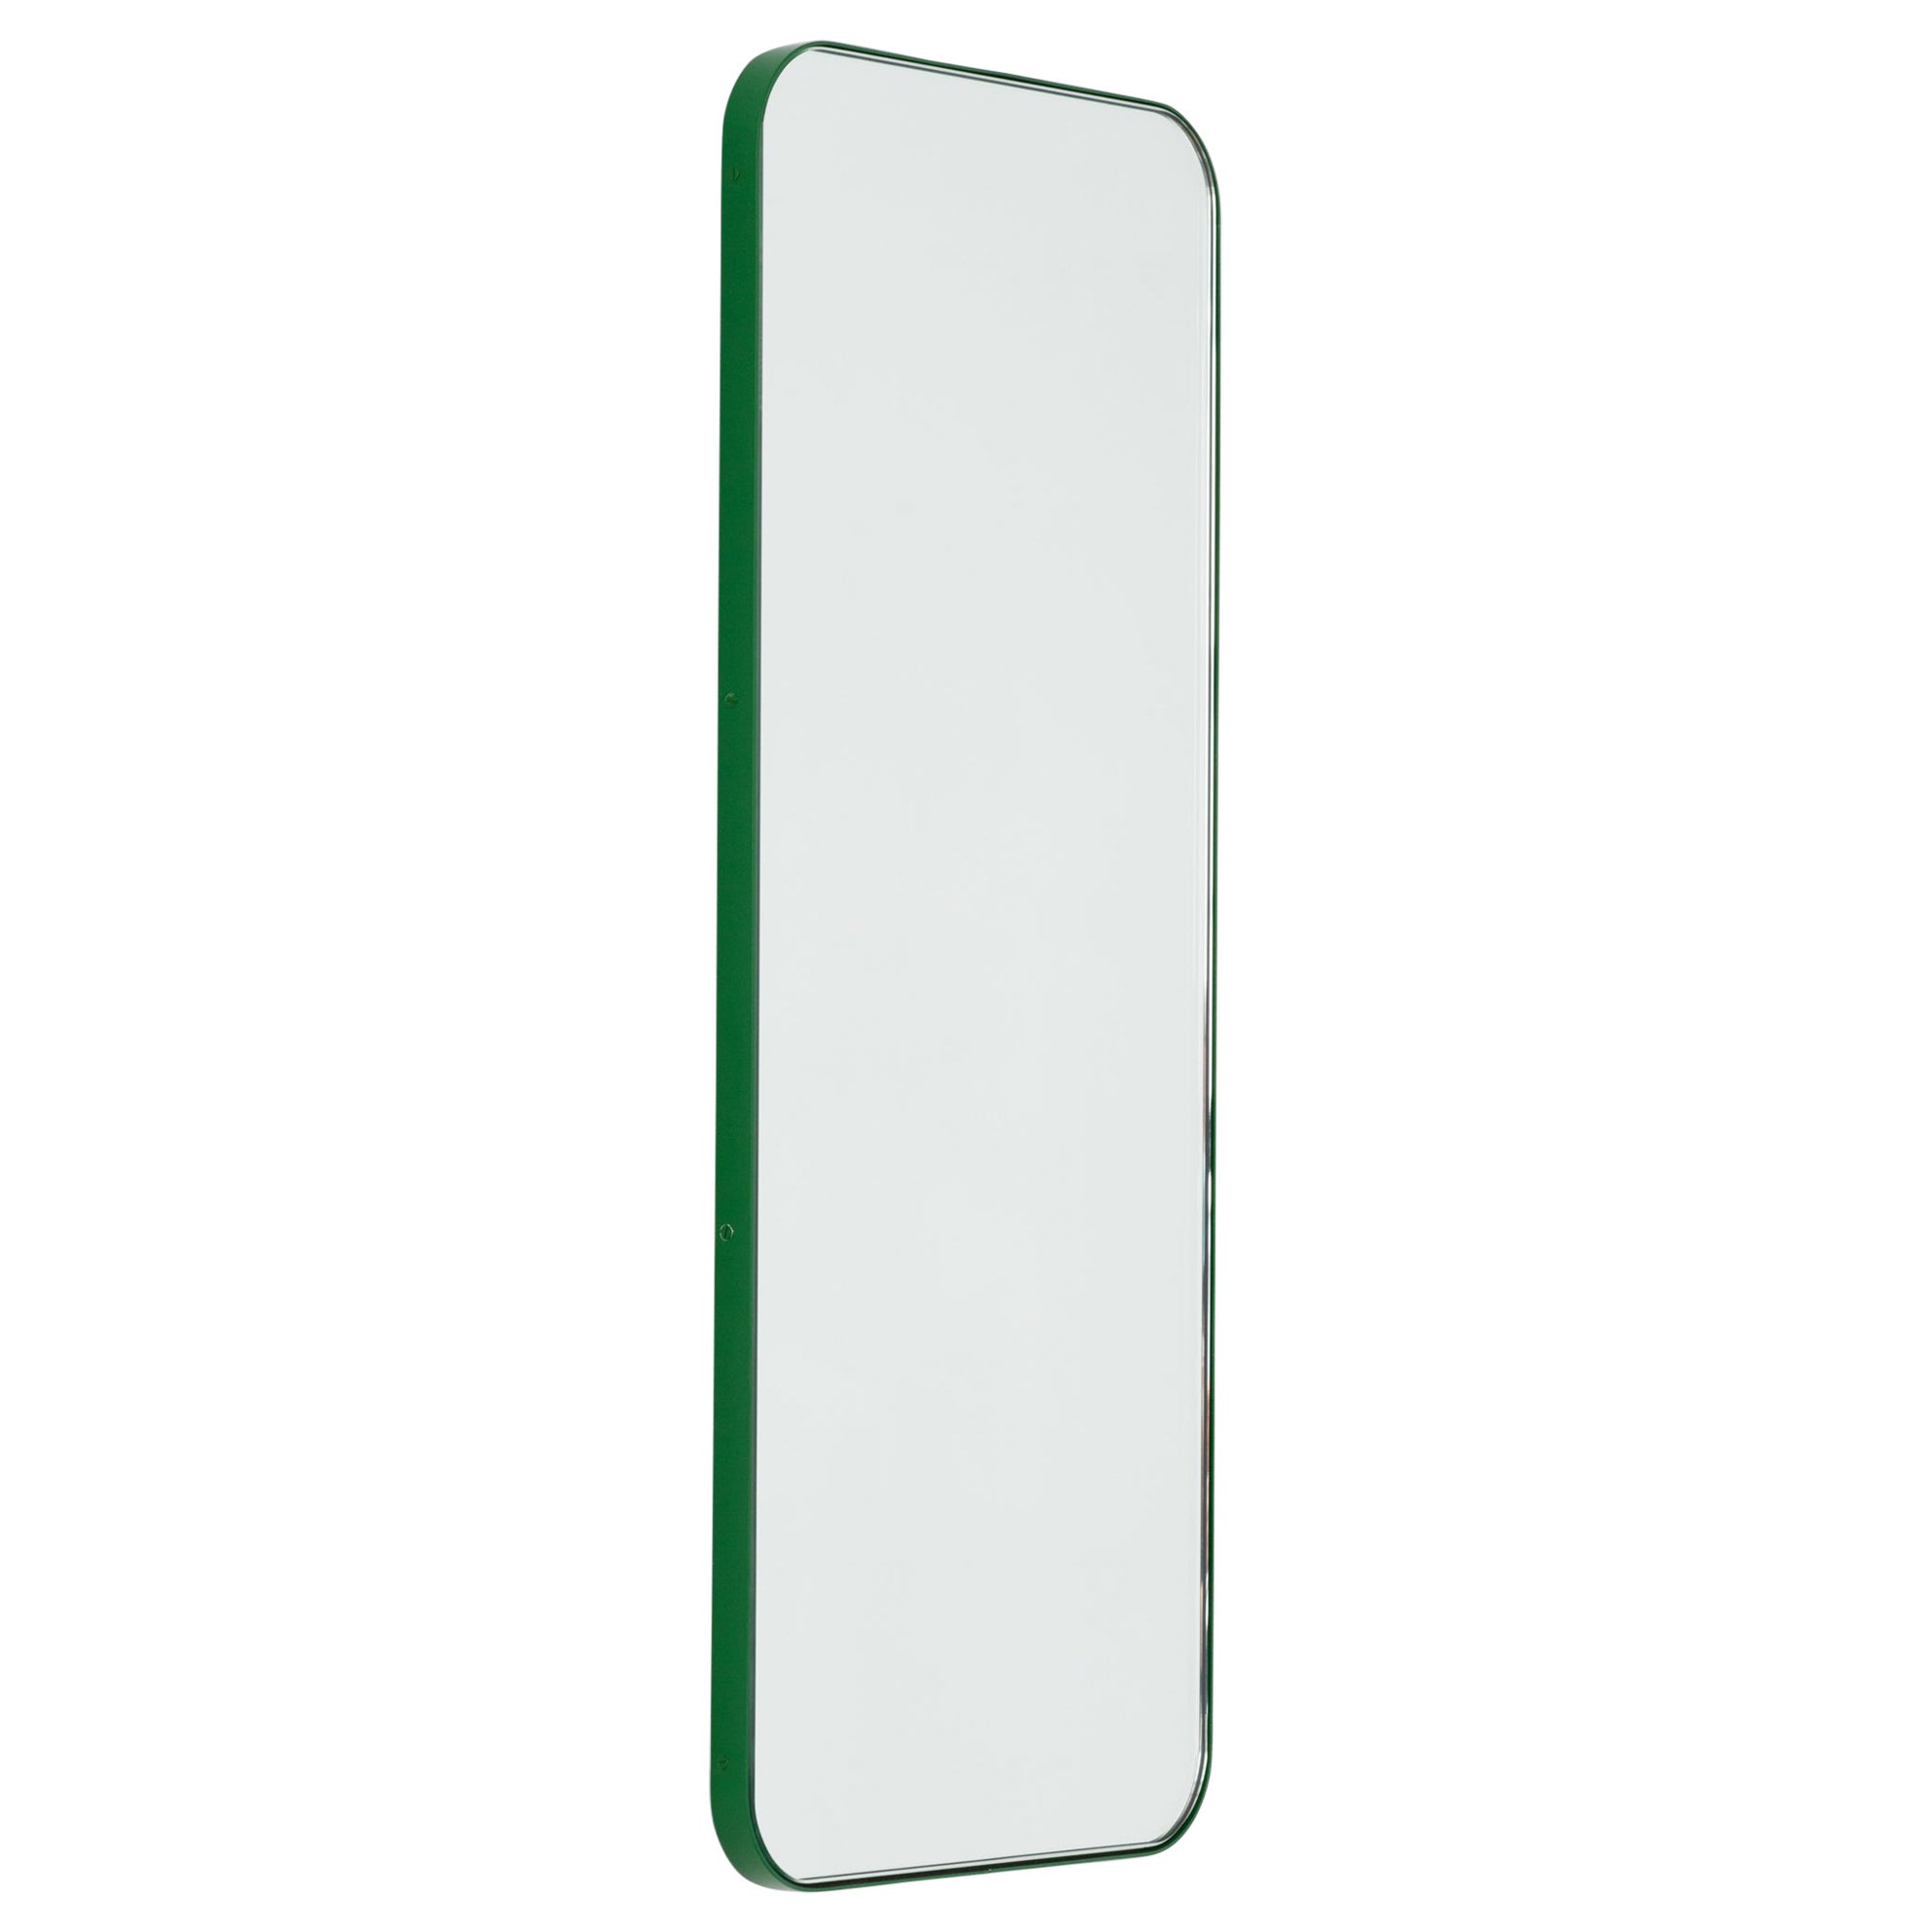 Quadris Rectangular Modern Mirror with a Green Frame, Large